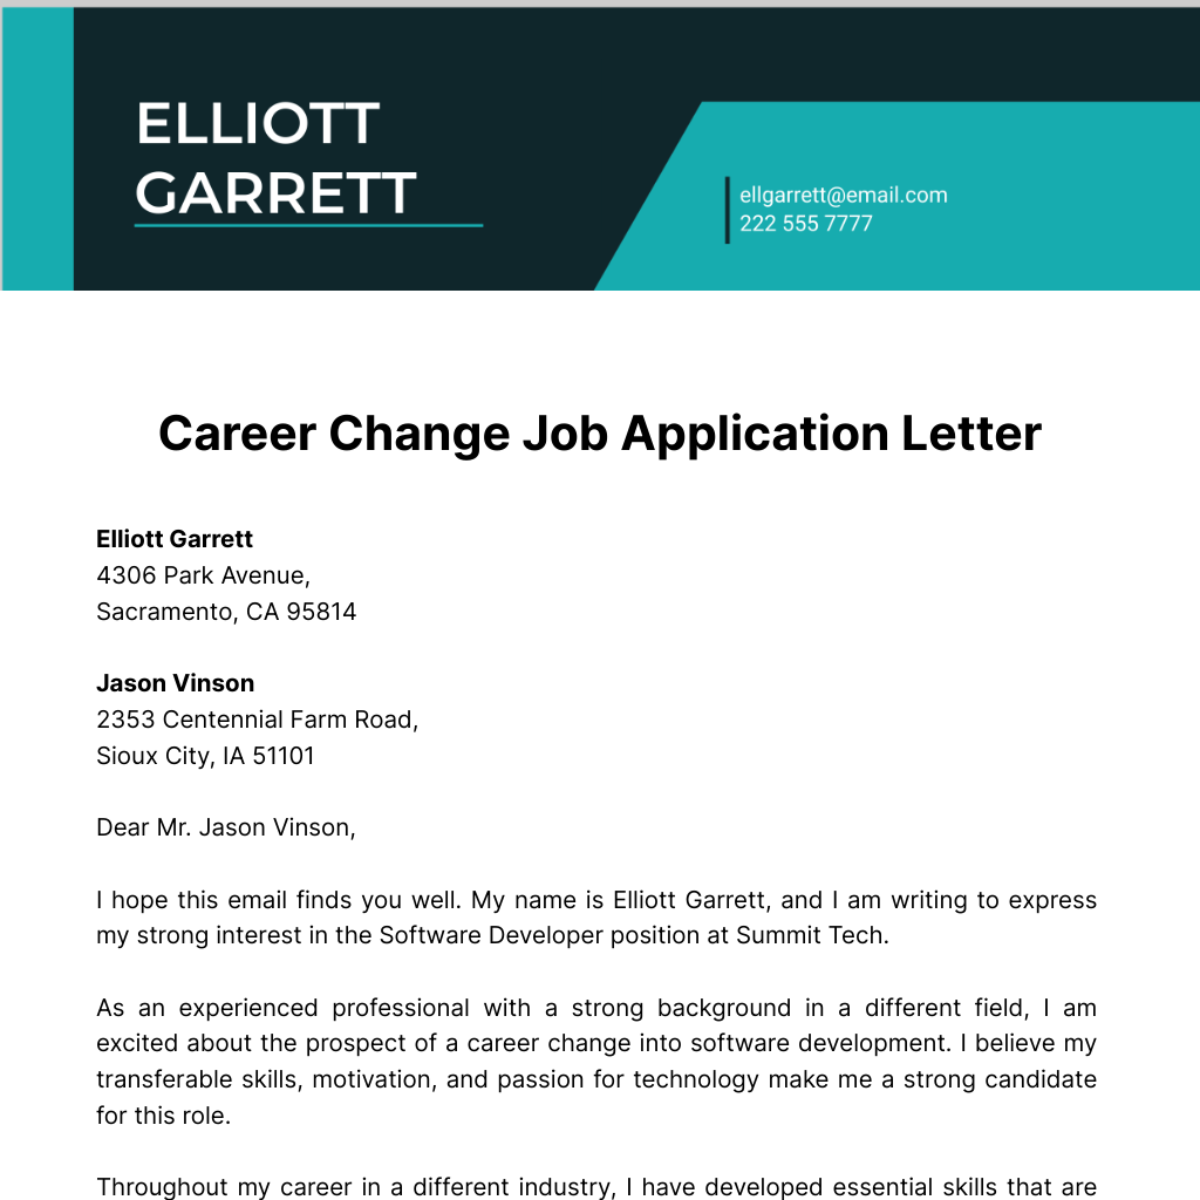 Career Change Job Application Letter  Template